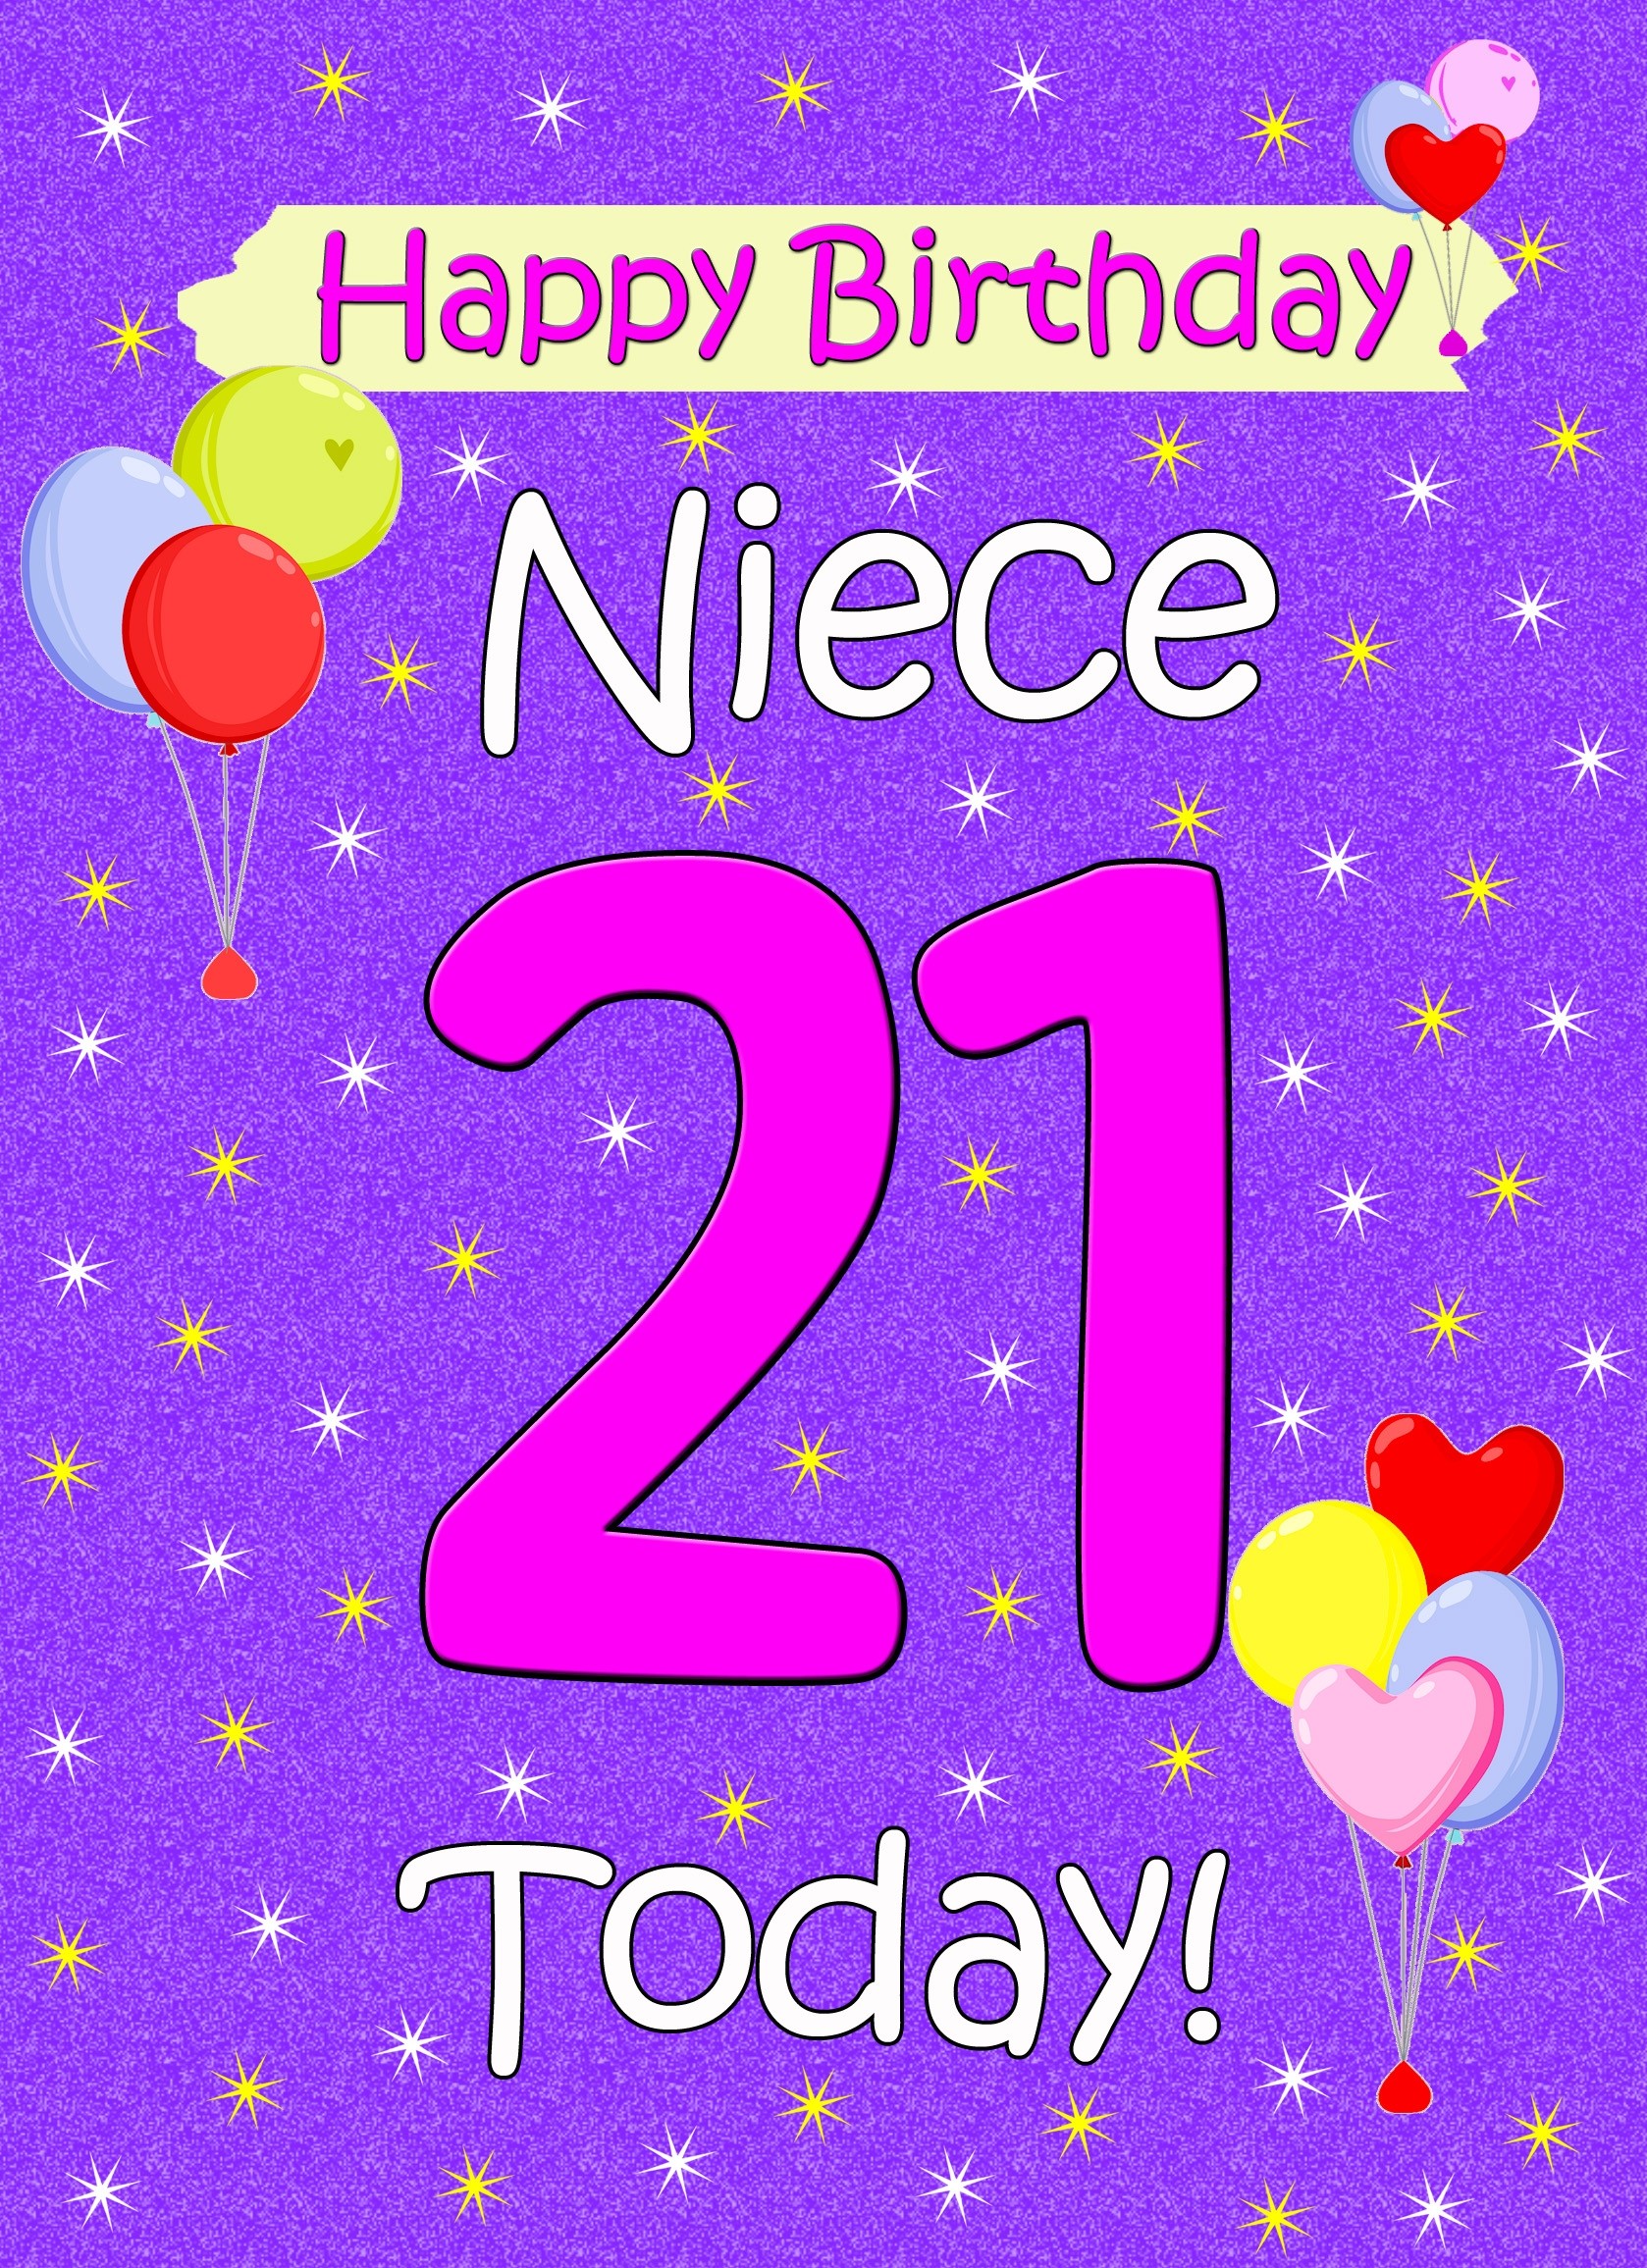 Niece 21st Birthday Card (Lilac)